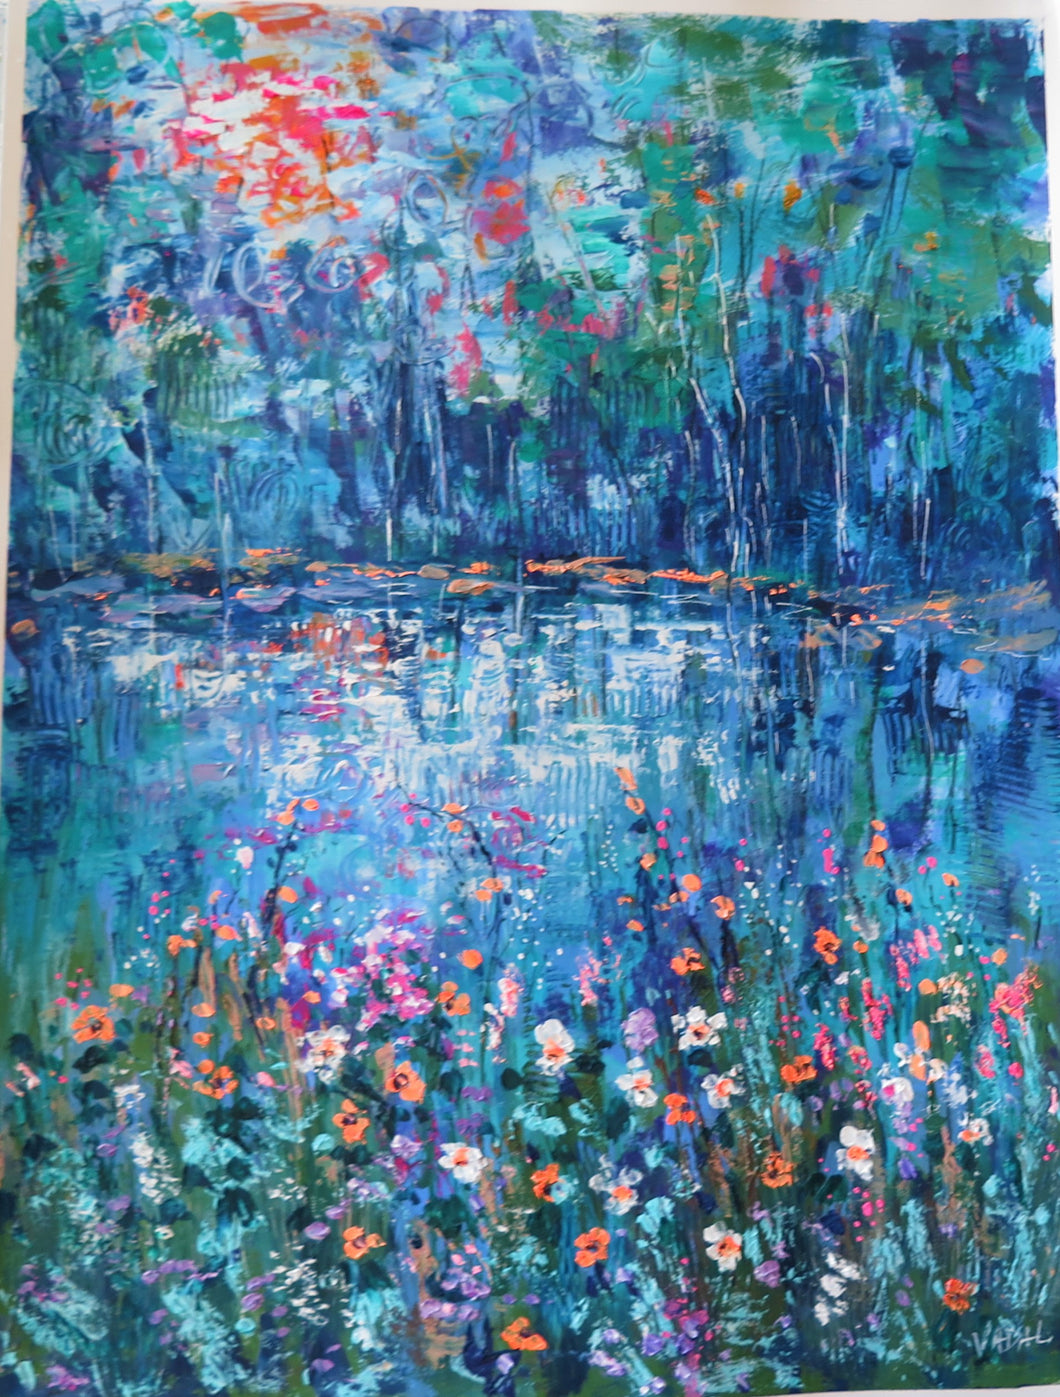 Blue wild flower meadow and  pond - 18 x 24